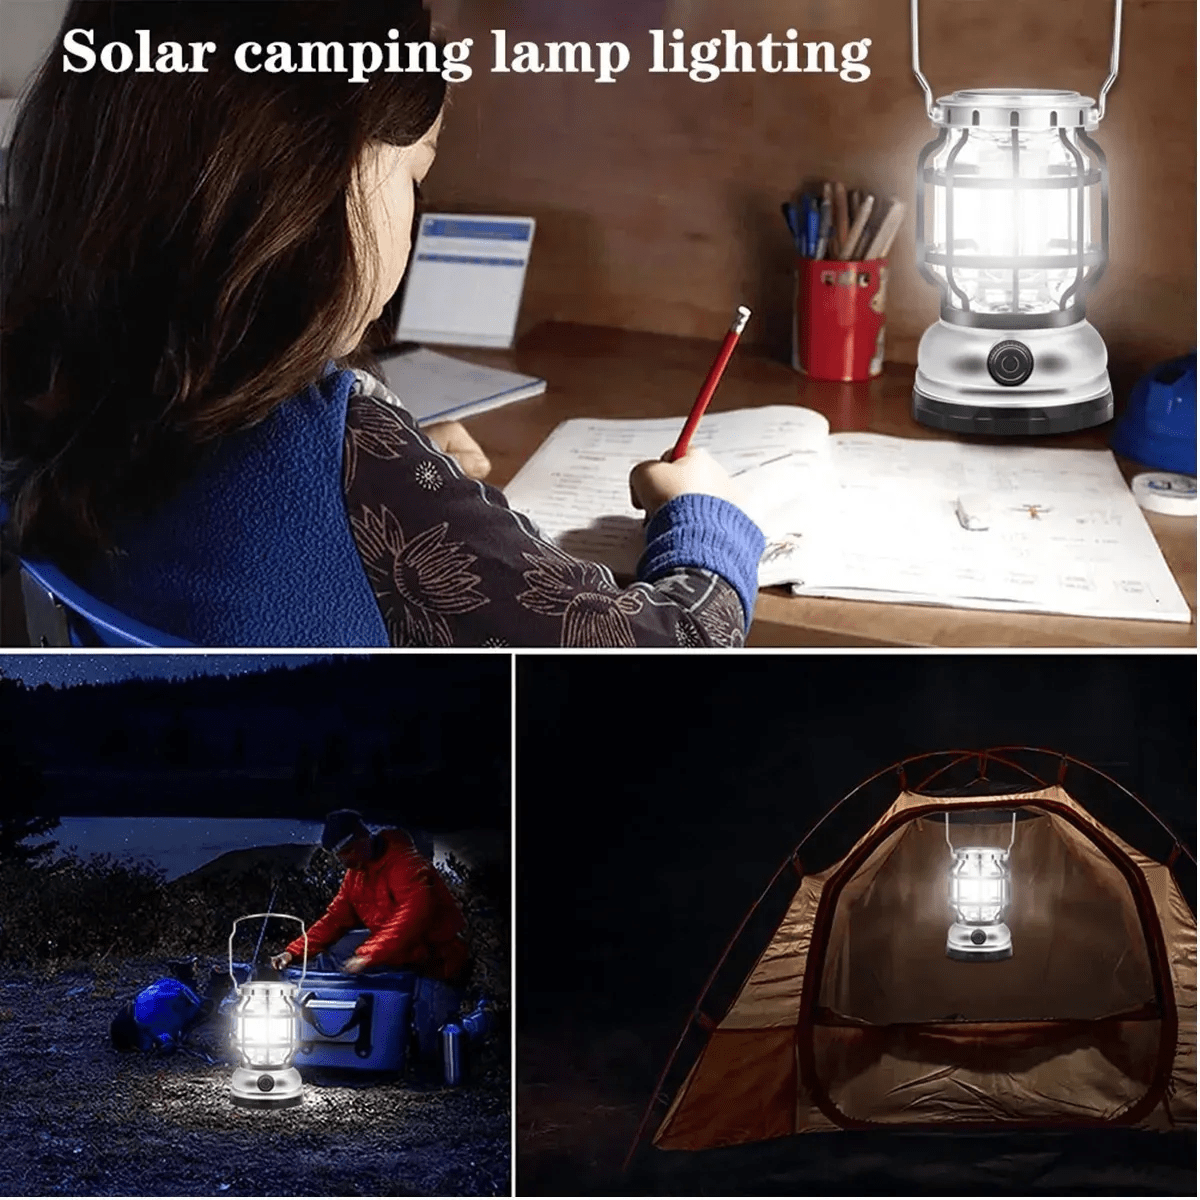 Lampara retro solar recargable camping outdoor LTL2